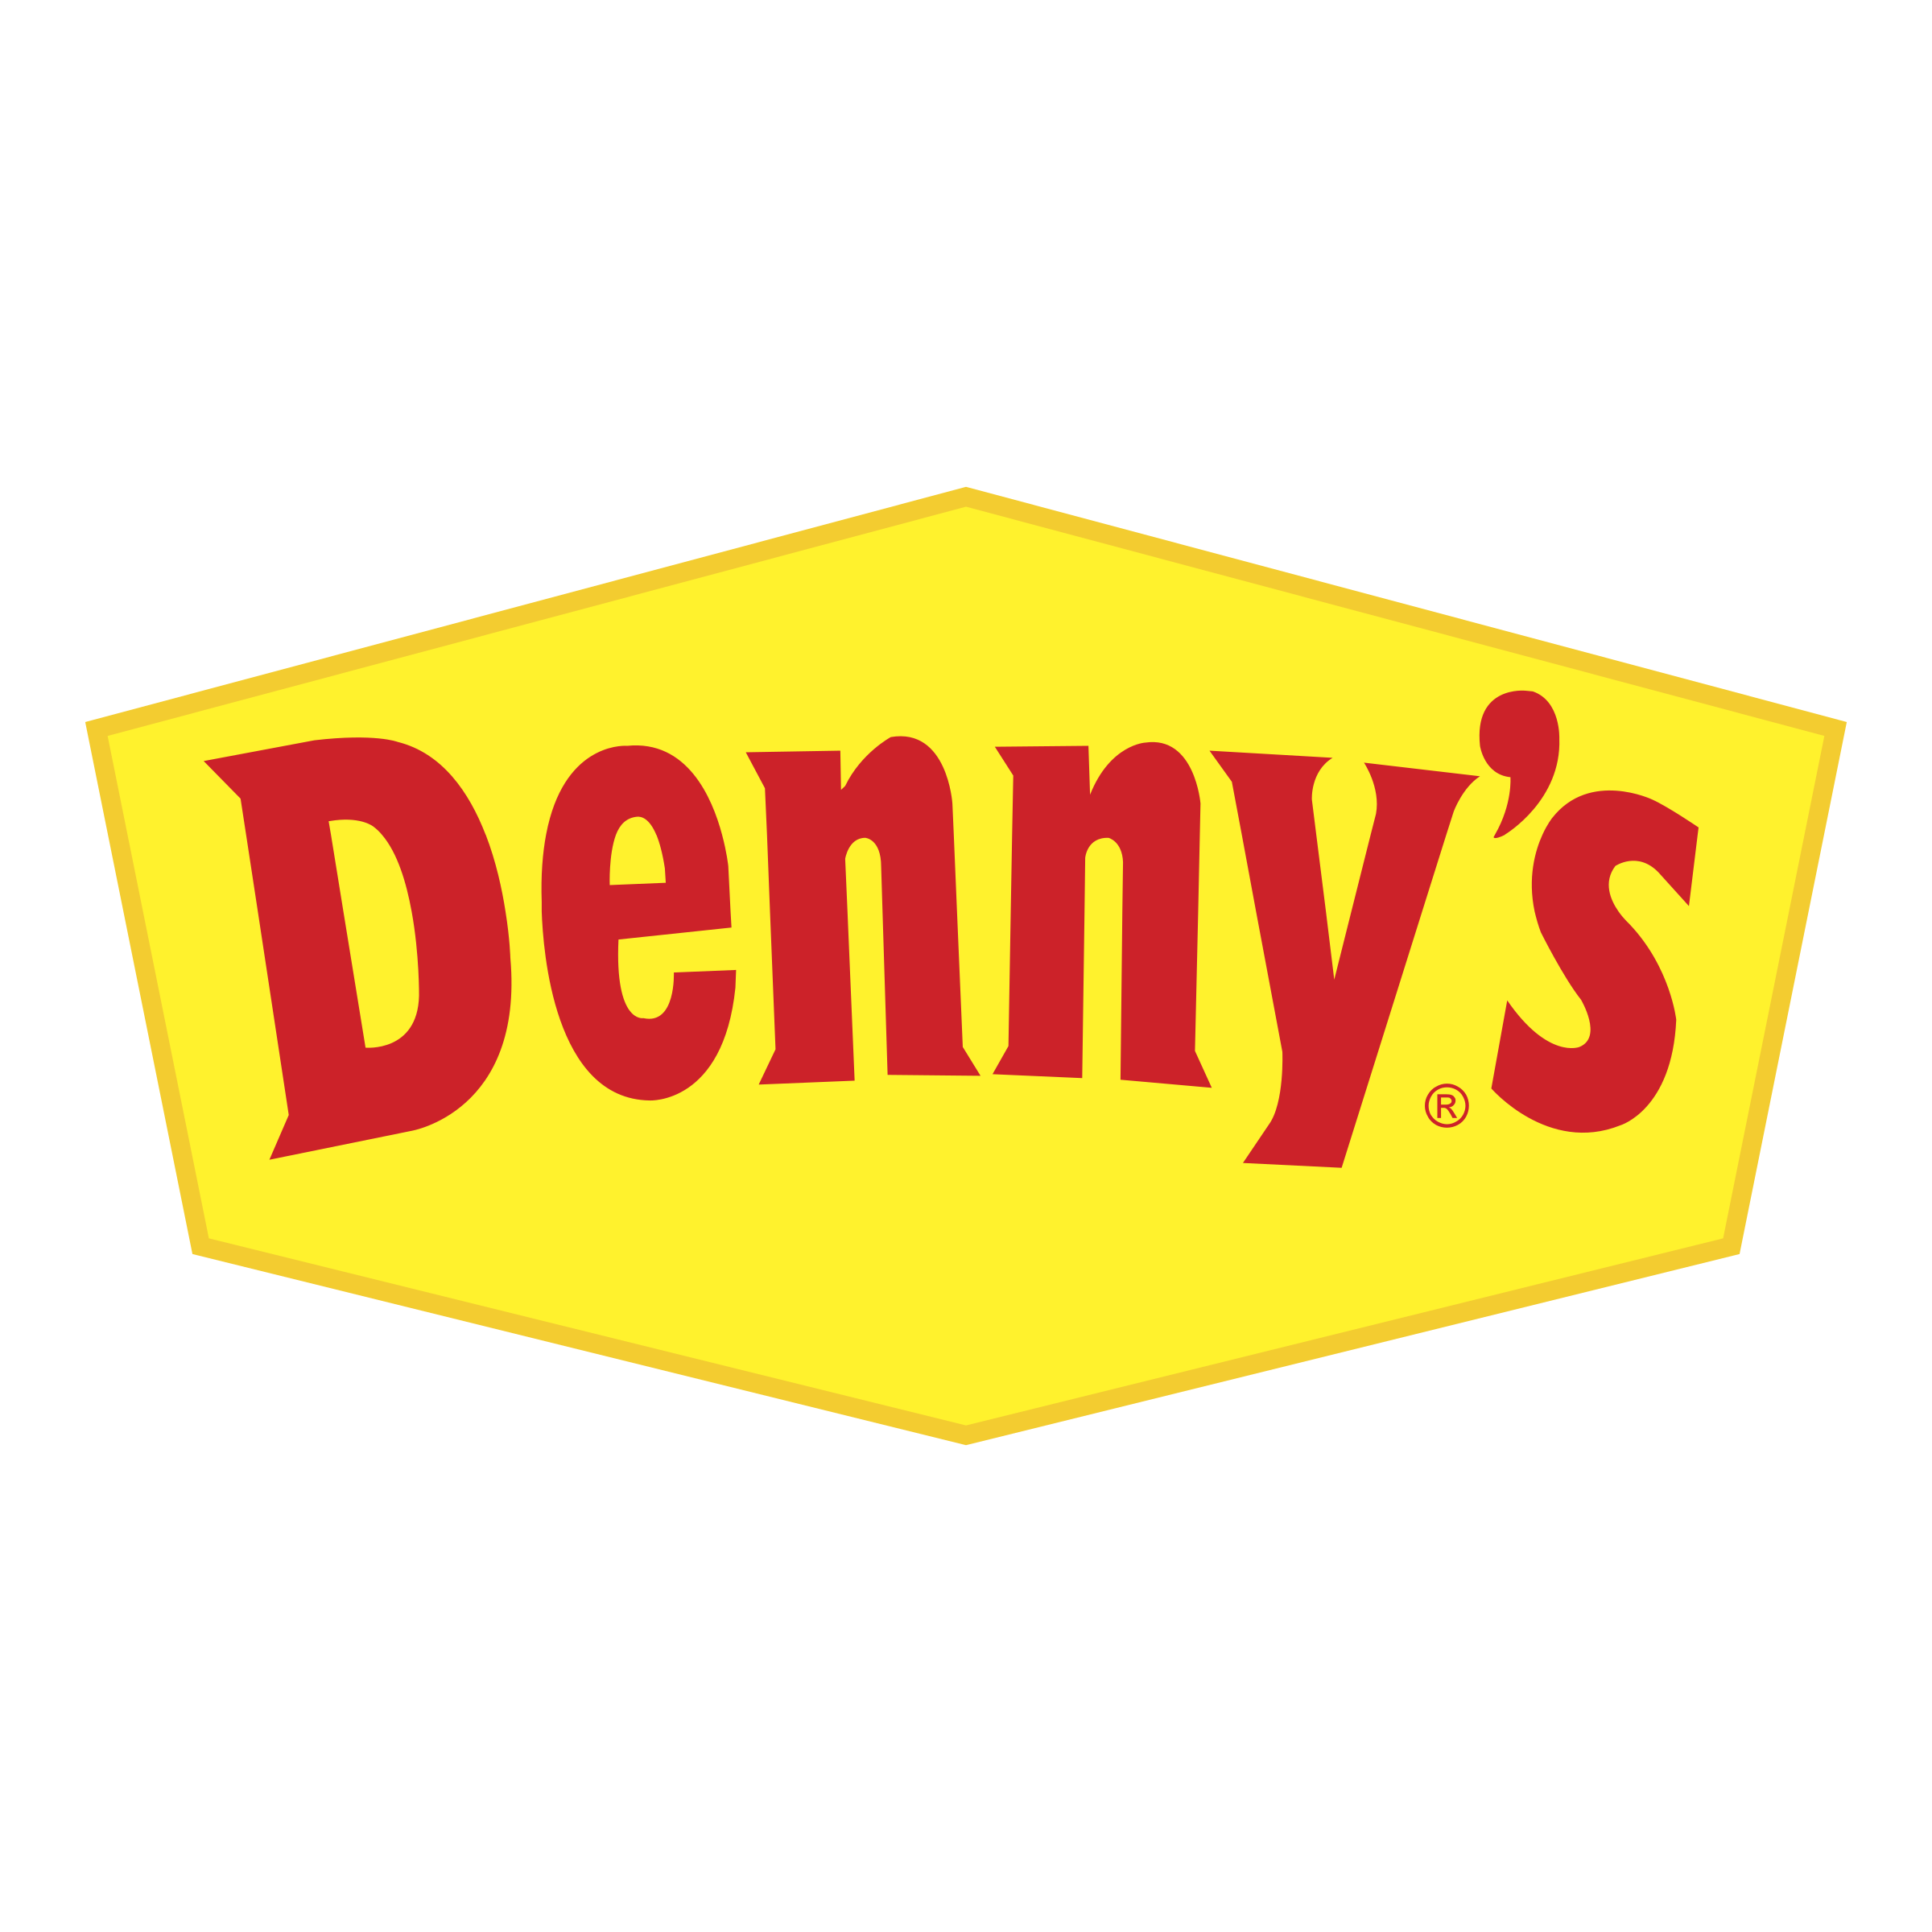 dennys-2-logo-png-transparent